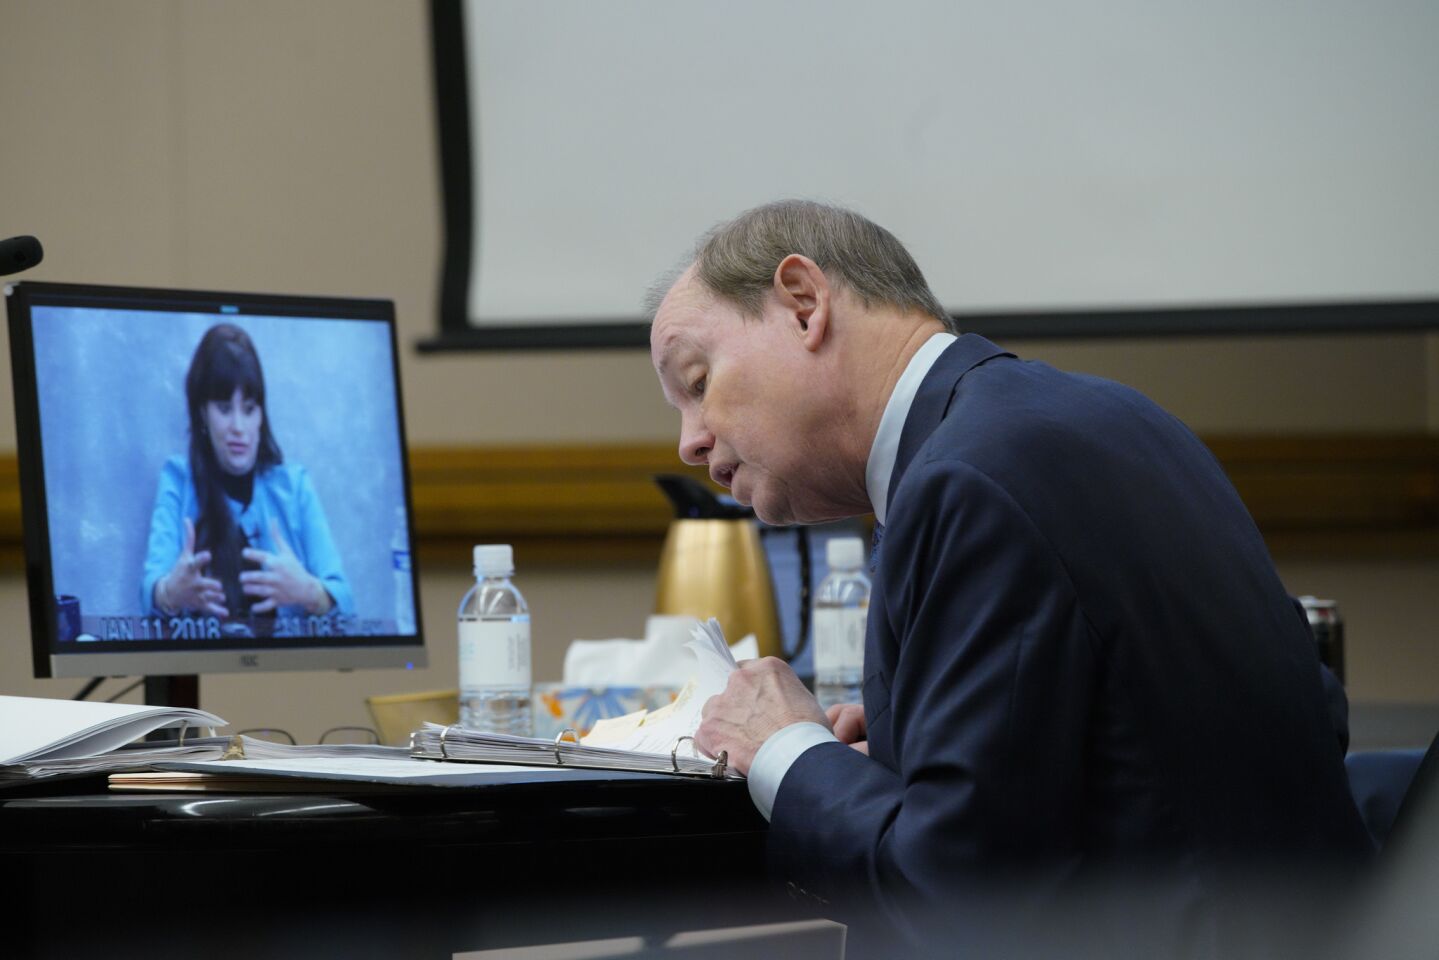 Dan Webb, defense attorney for Adam Shacknai reviews his notes during the video playback of Dina Shacknai's deposition taken on January 11, 2018.